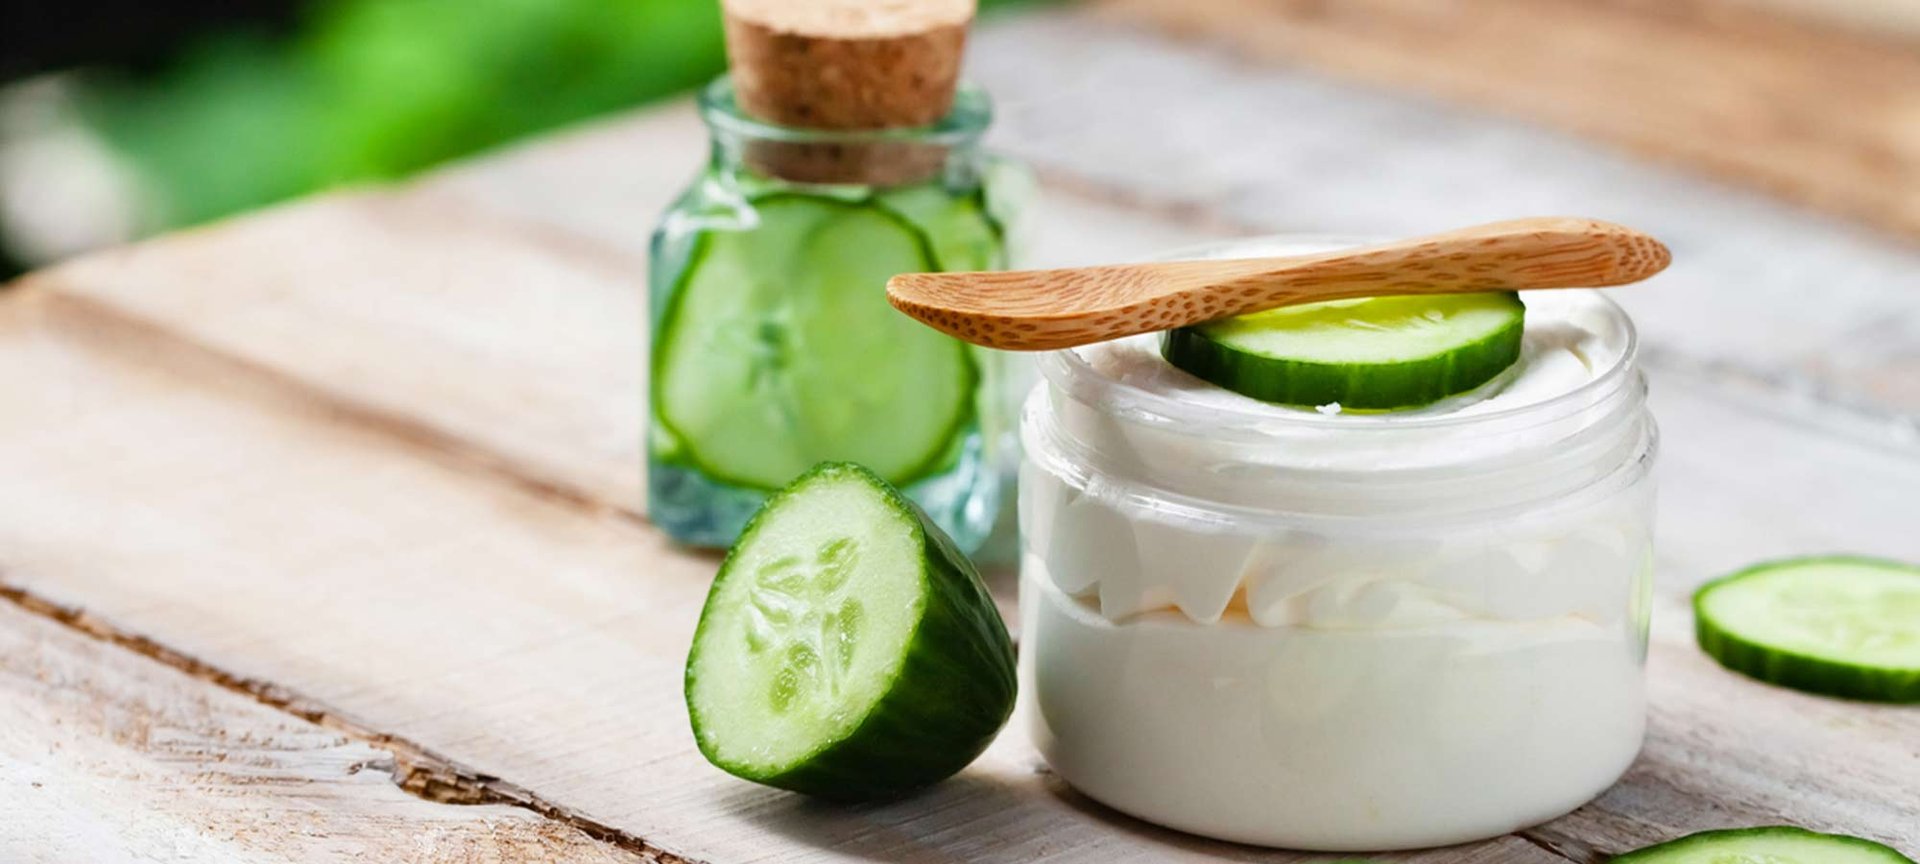 Cucumber Extract Antioxidant Properties and Benefits - L'Oréal Paris